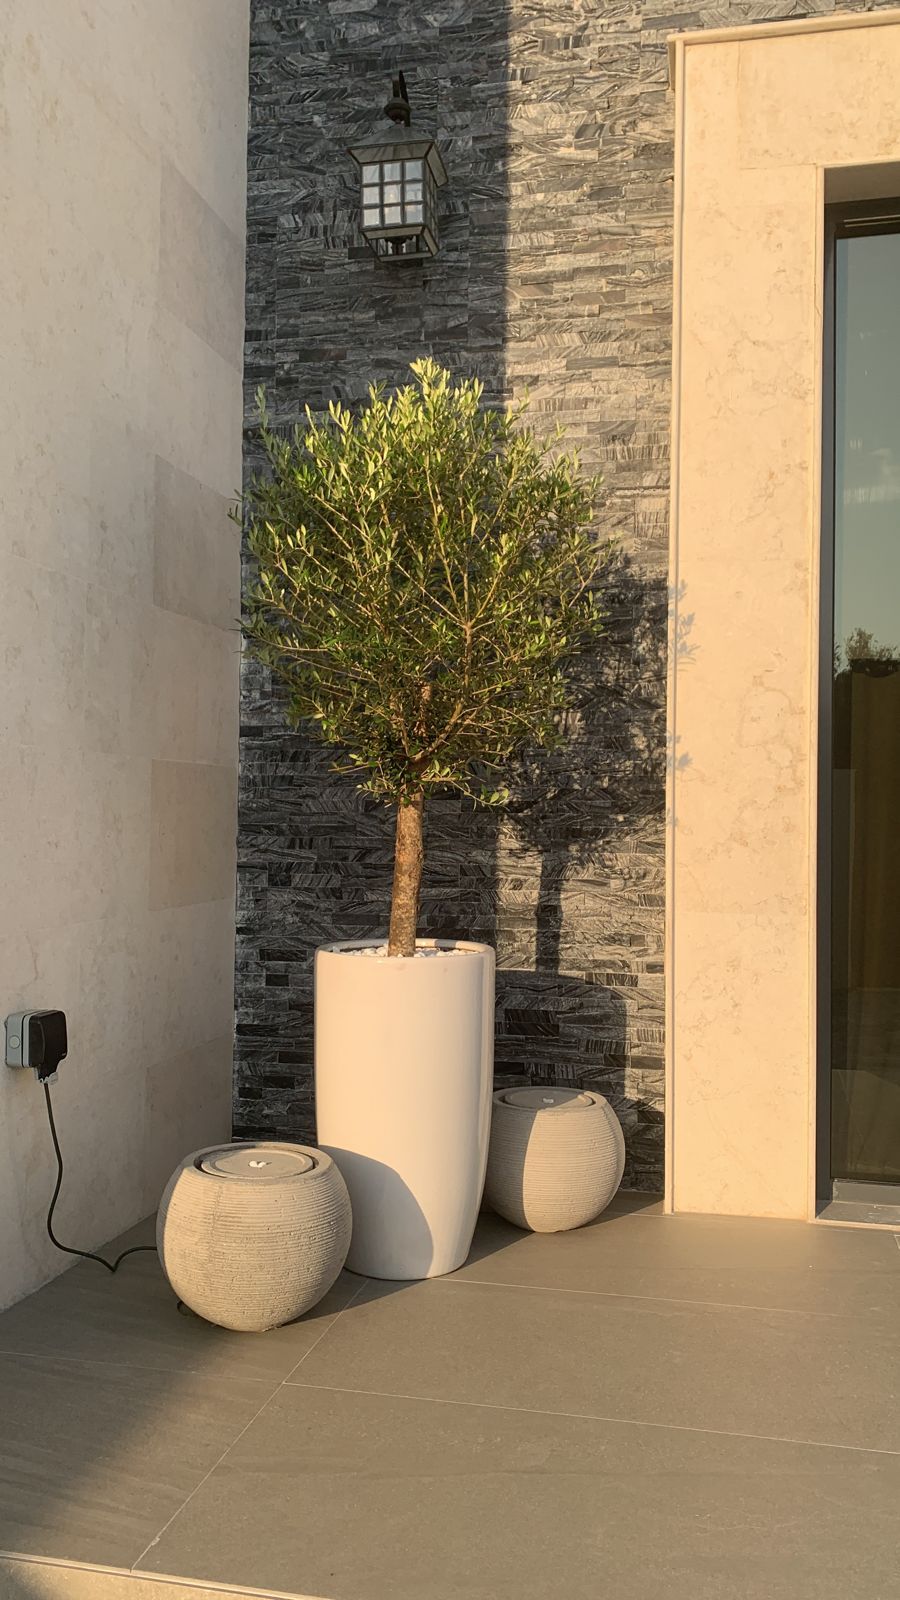 Office Plant Olive Tree (15r Old) in White Ceramic